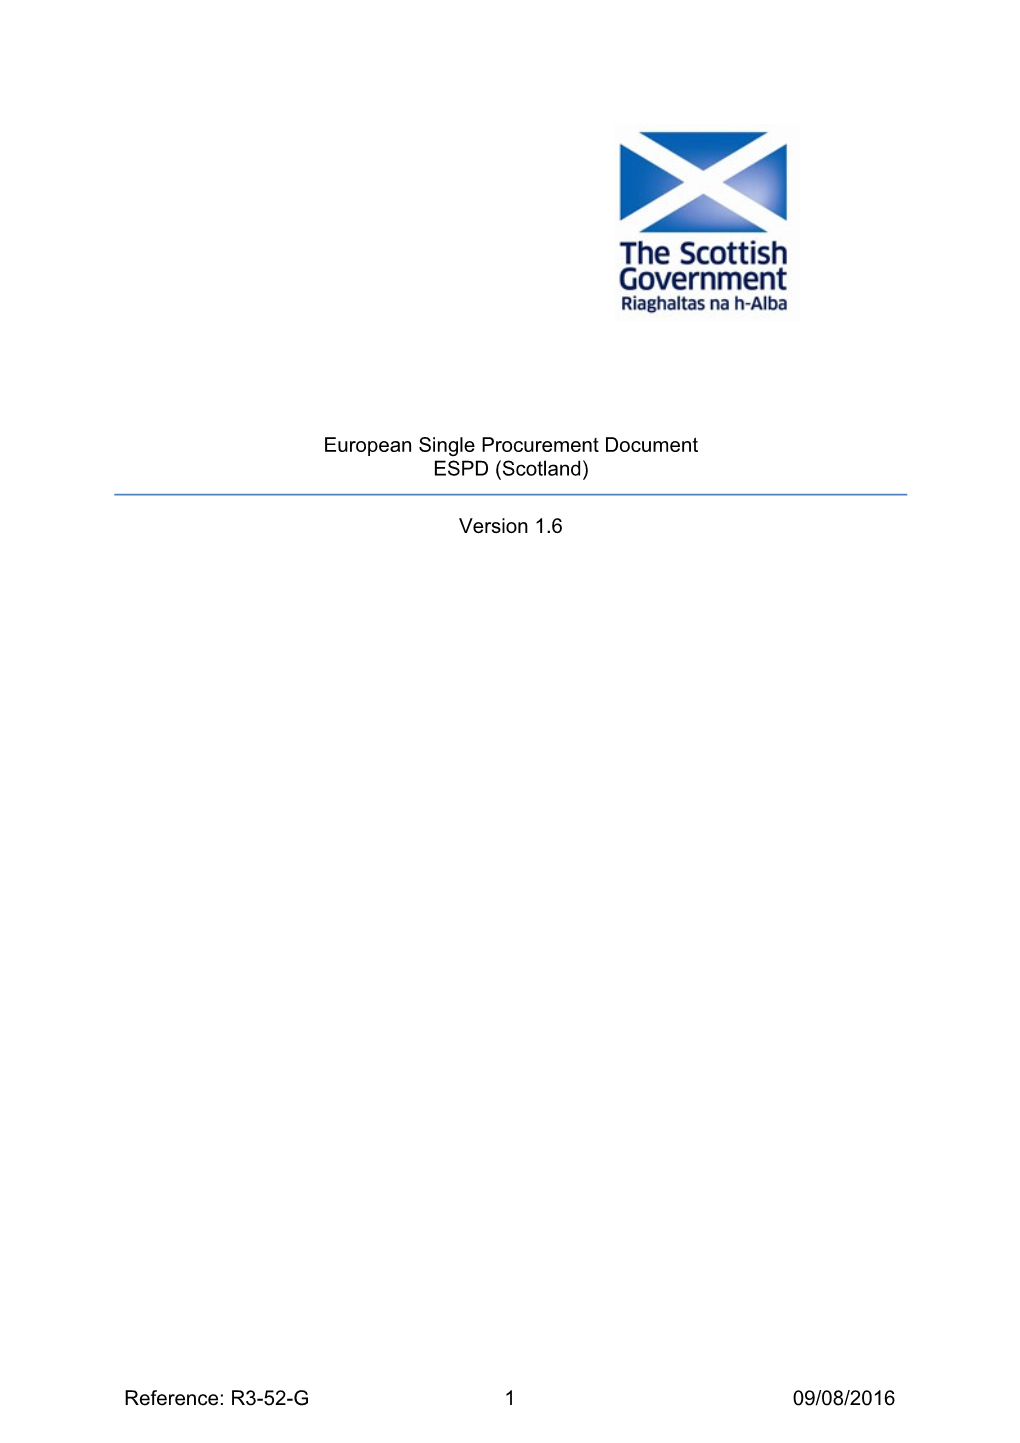 European Single Procurement Document (Scotland)